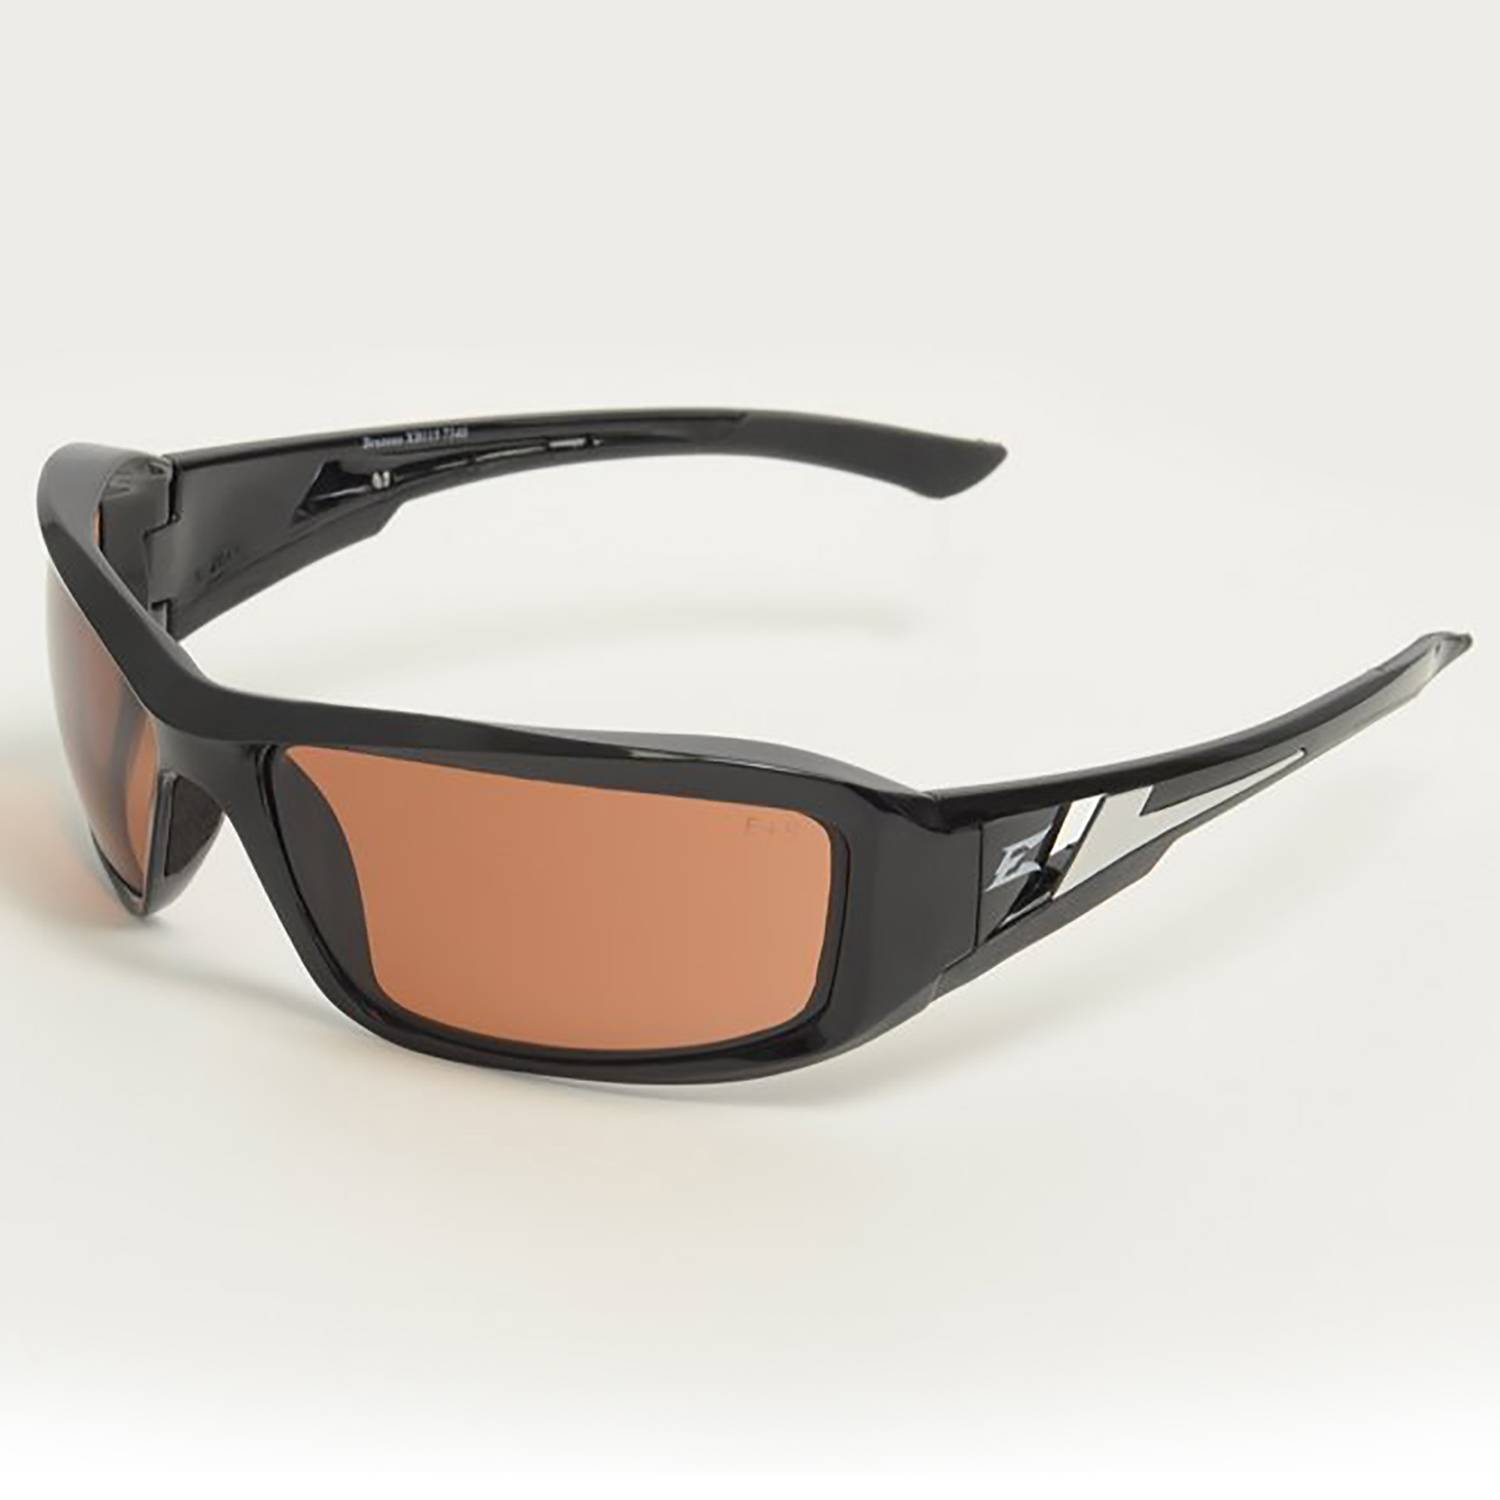 Edge Eyewear Brazeau Safety Glasses Black with Copper Drivin